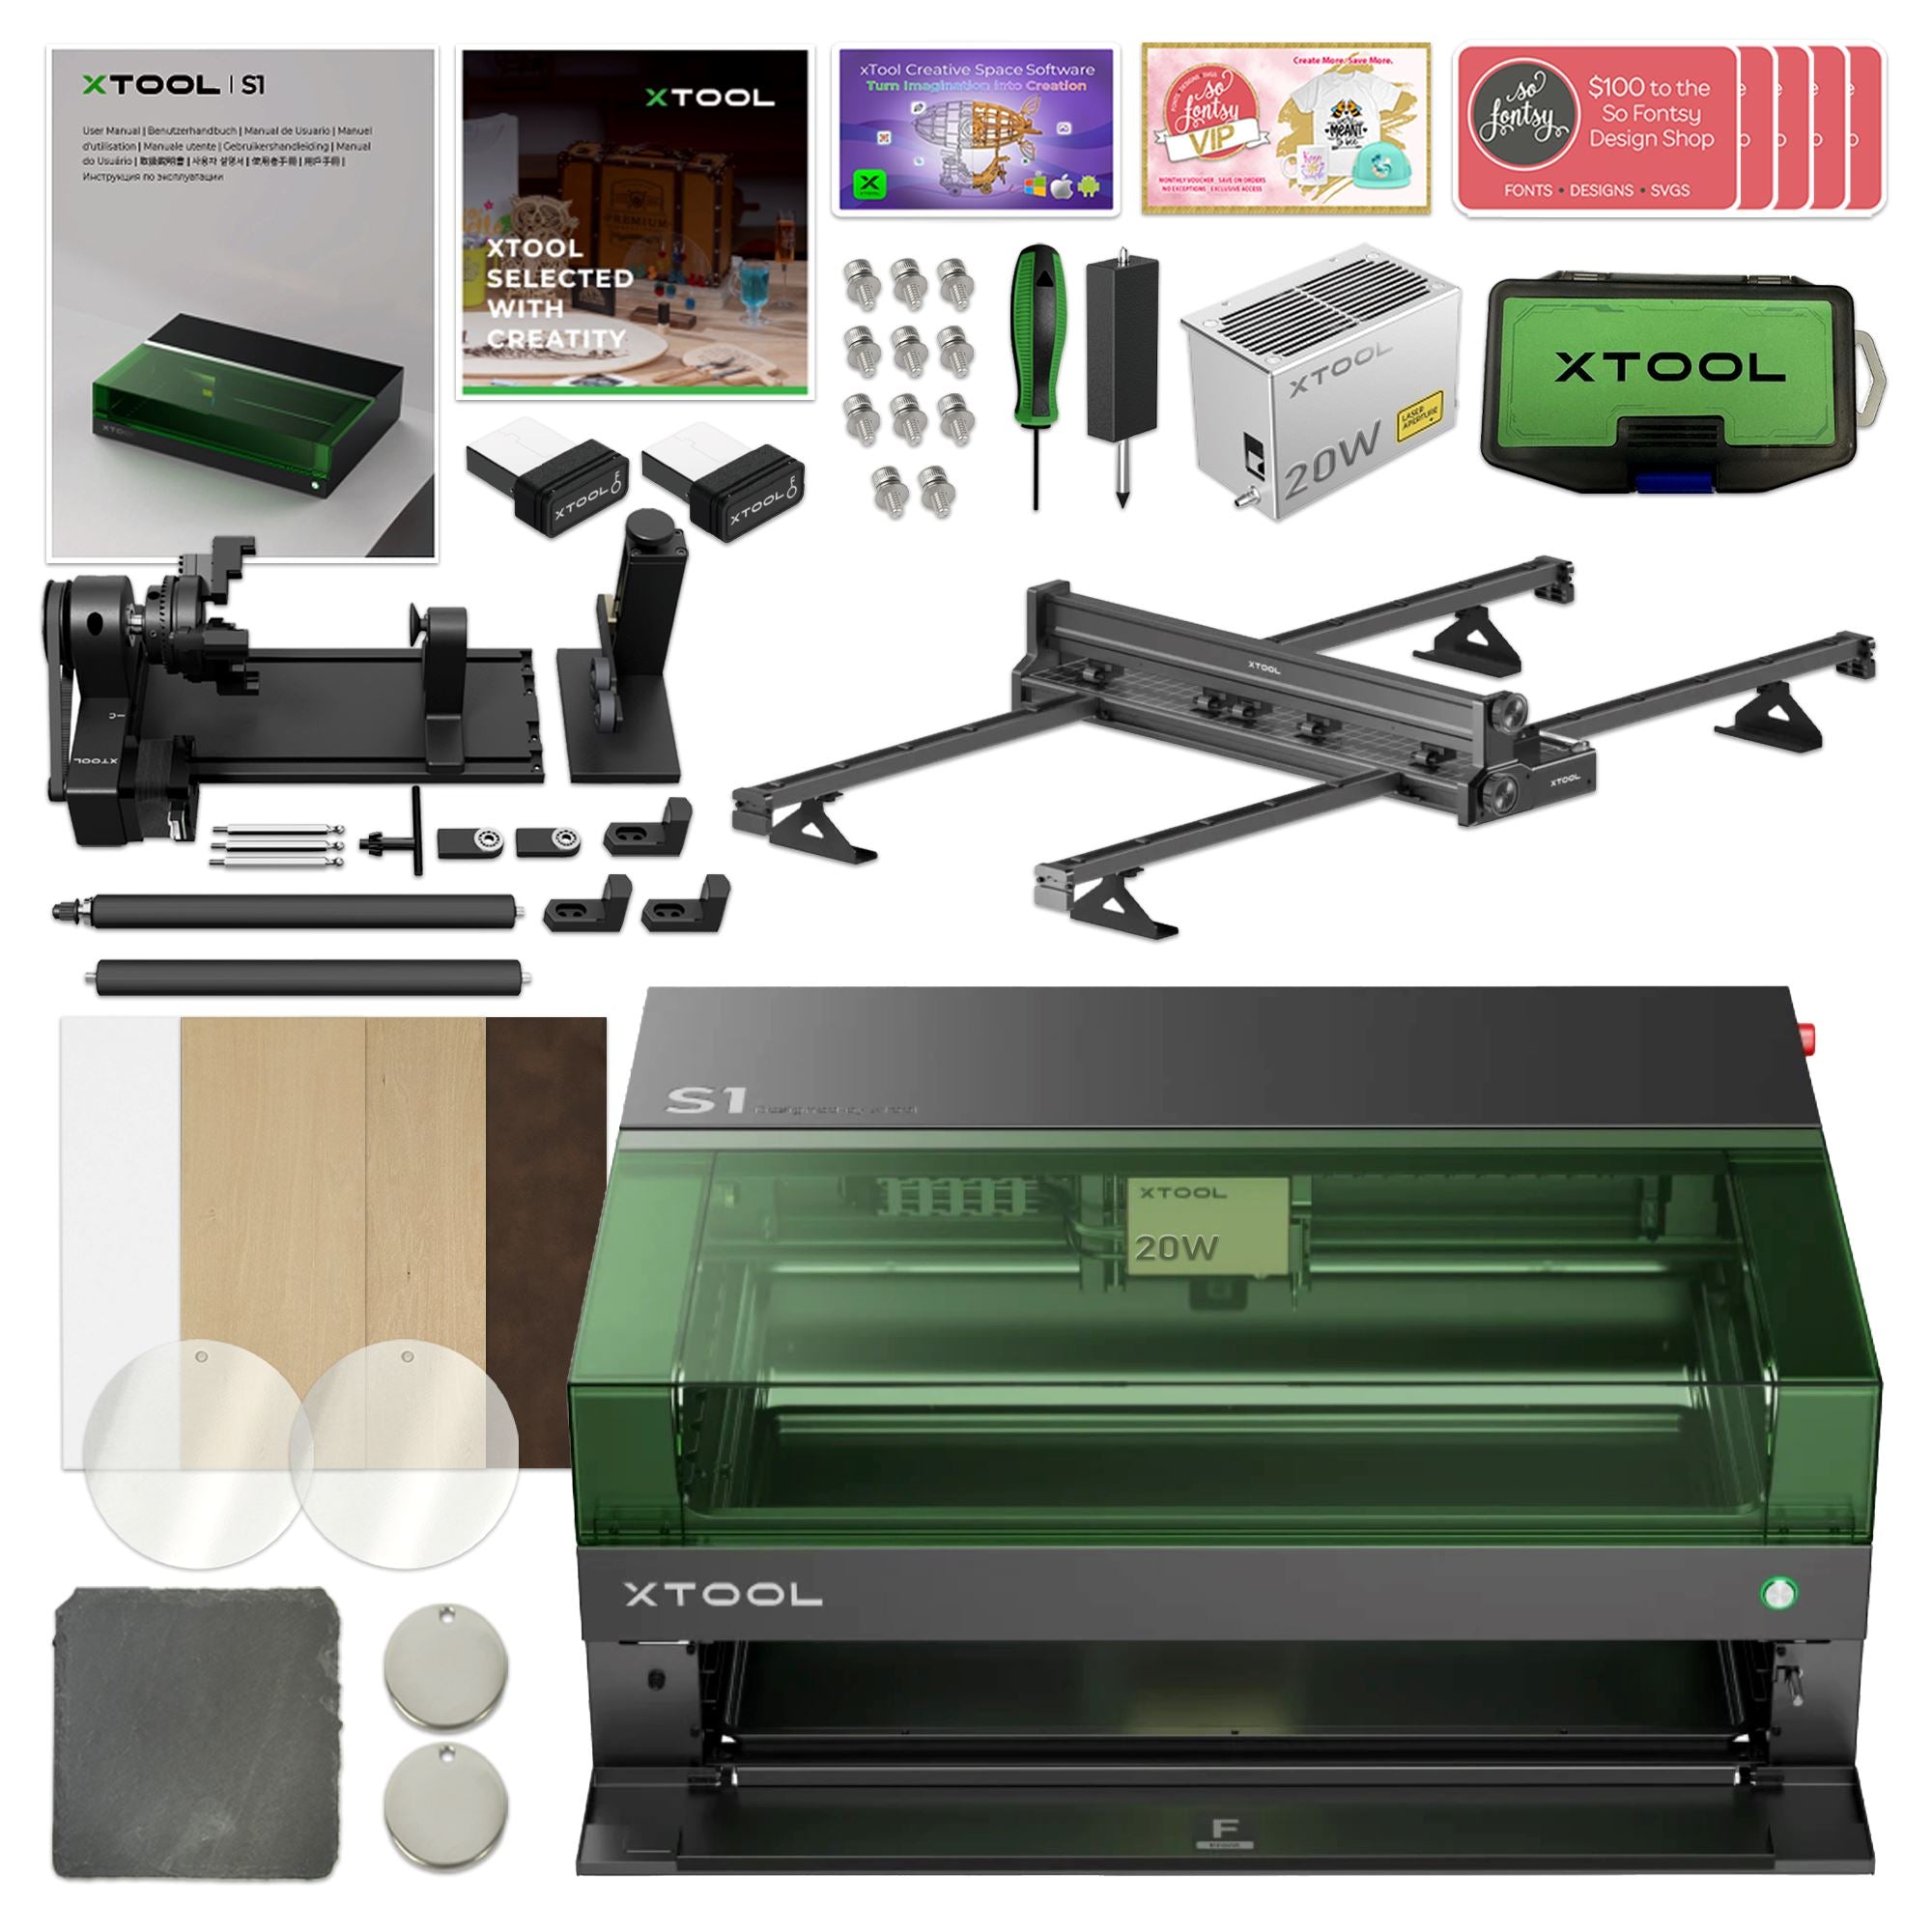 xTool S1 Laser Cutter & Engraver Machine Bundle w/ Rotary, Rail, Riser, Filter - 20W Diode Laser